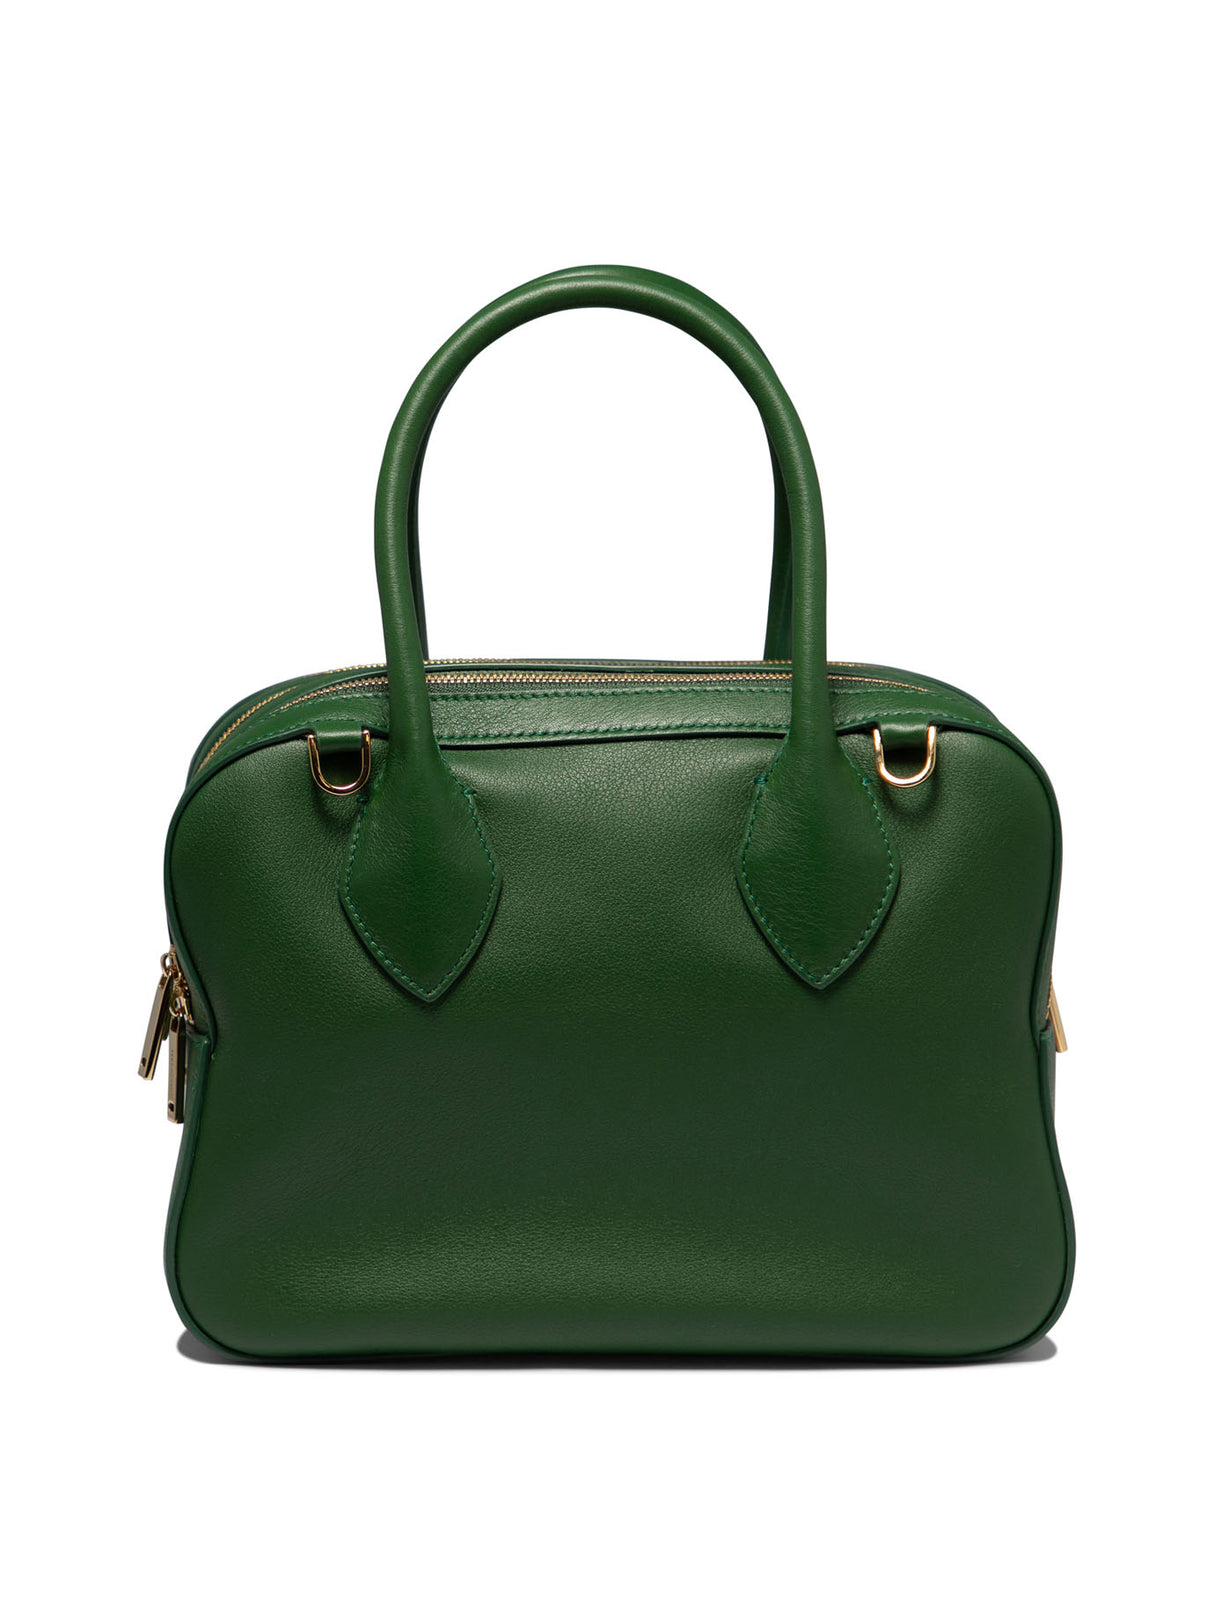 FERRAGAMO Deconstructed Green Leather Handbag for Women